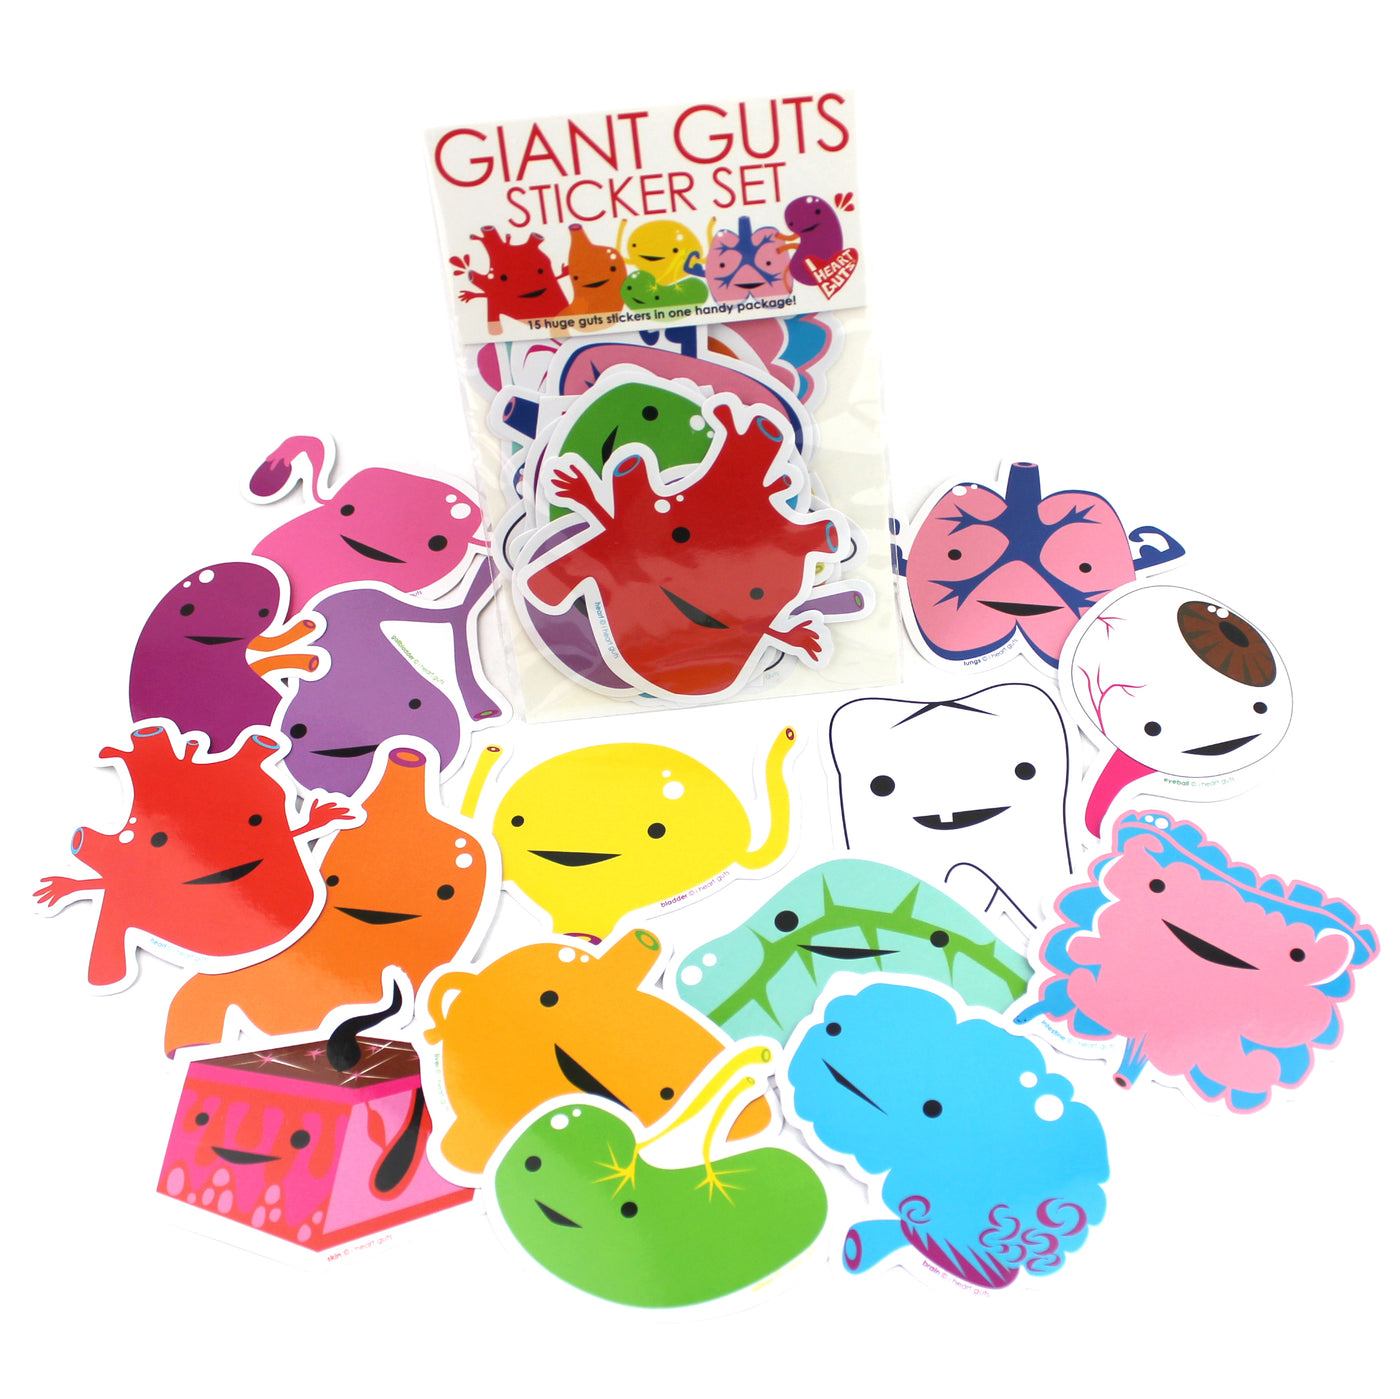 Giant Guts Sticker Set - Human Anatomy Stickers - Cute Organ Vinyl Stickers